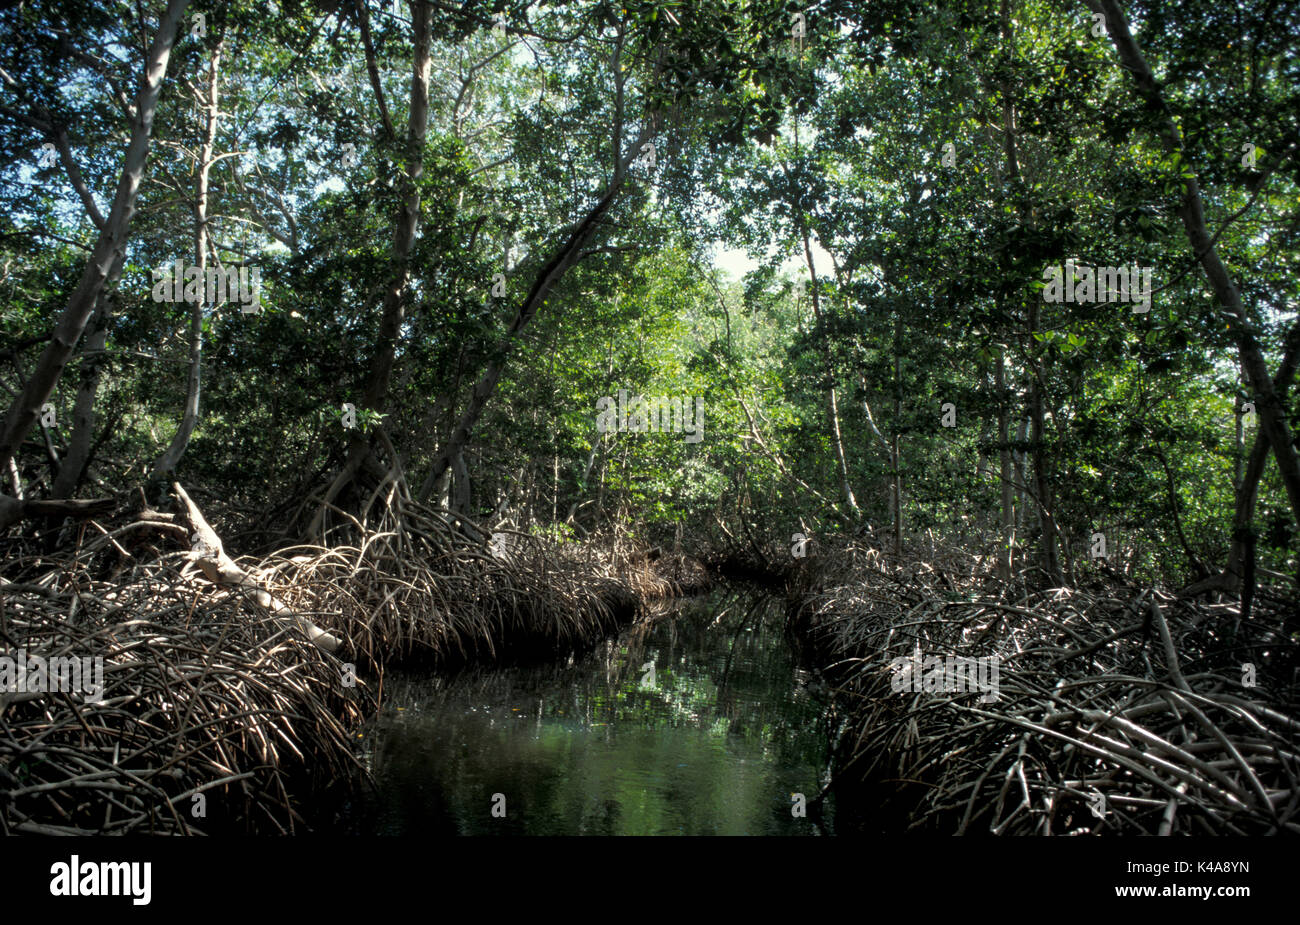 Mangrove Lagoon or Swamp, Margarita Island, Venezuela, showing roots into water, trees and shrubs that grow in saline coastal habitats in the tropics  Stock Photo